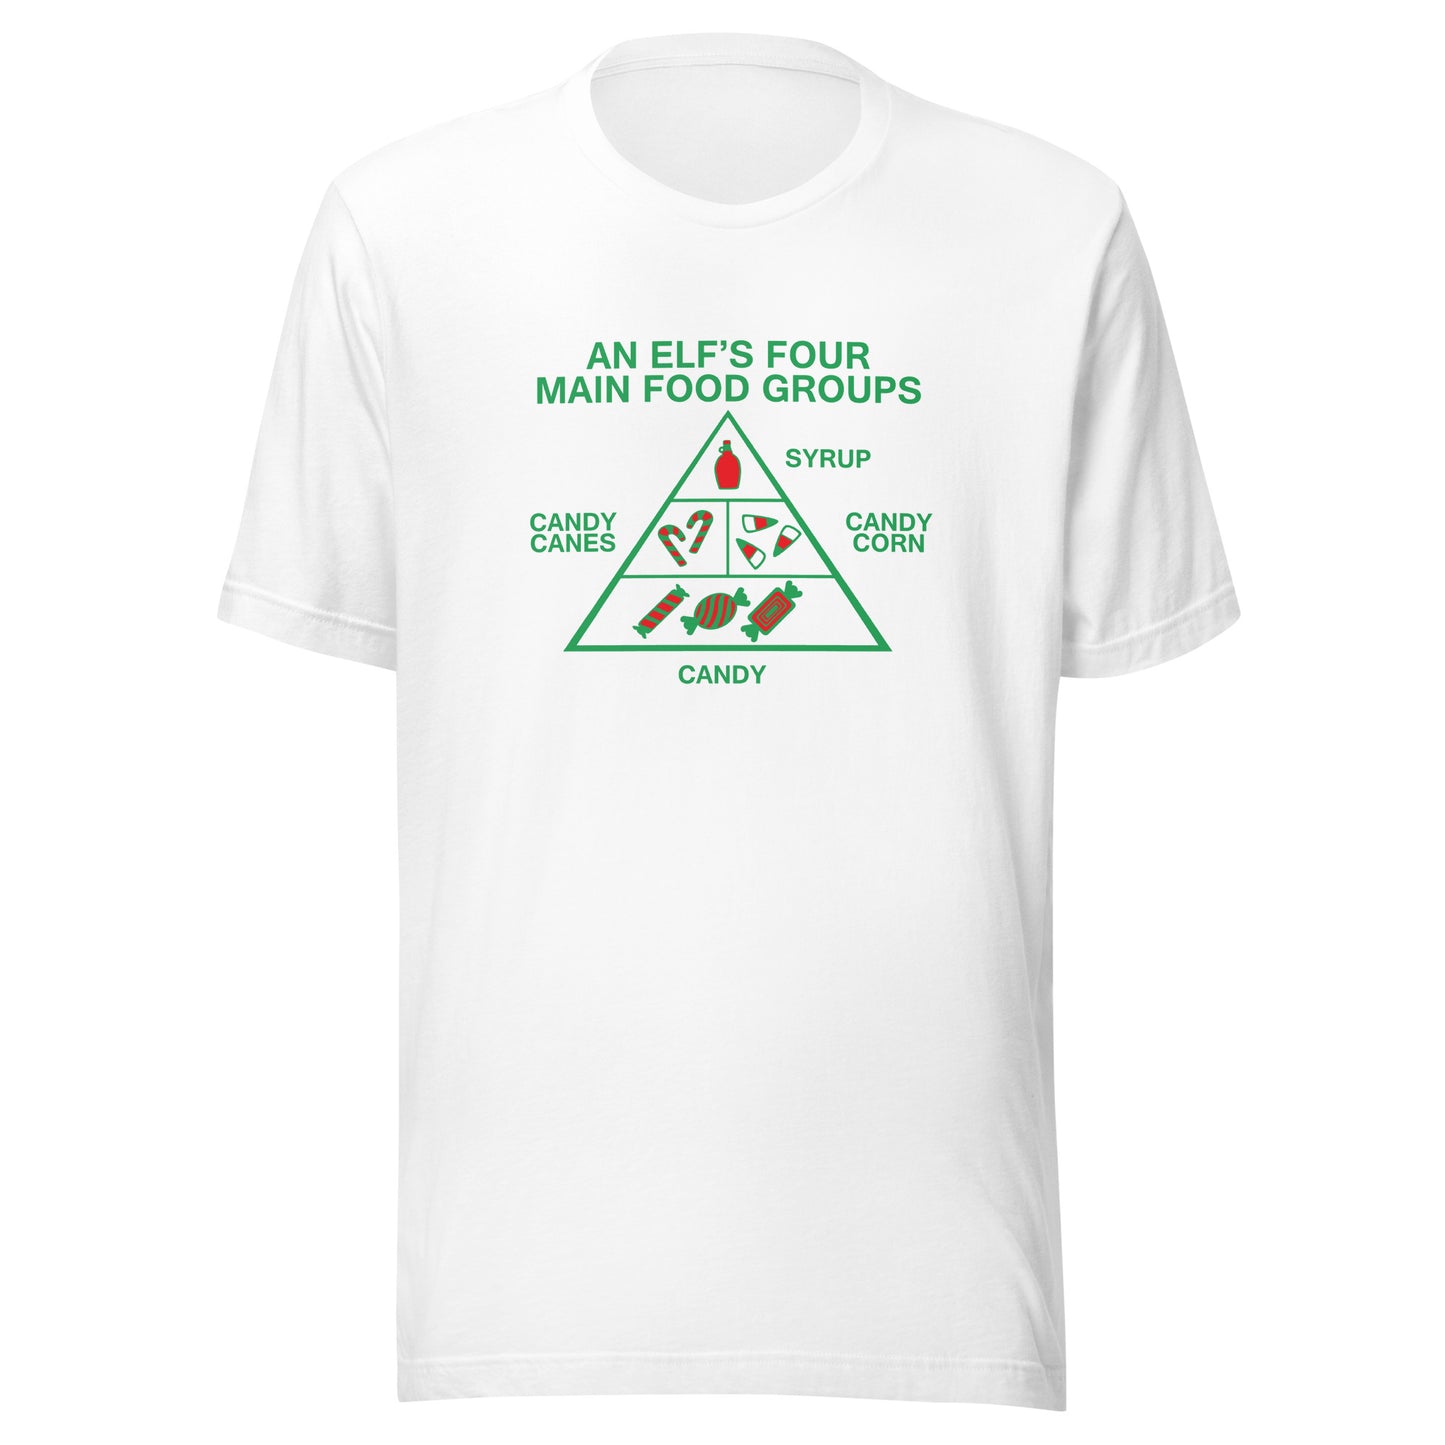 "An Elf's Four Main Food Groups" Unisex t-shirt